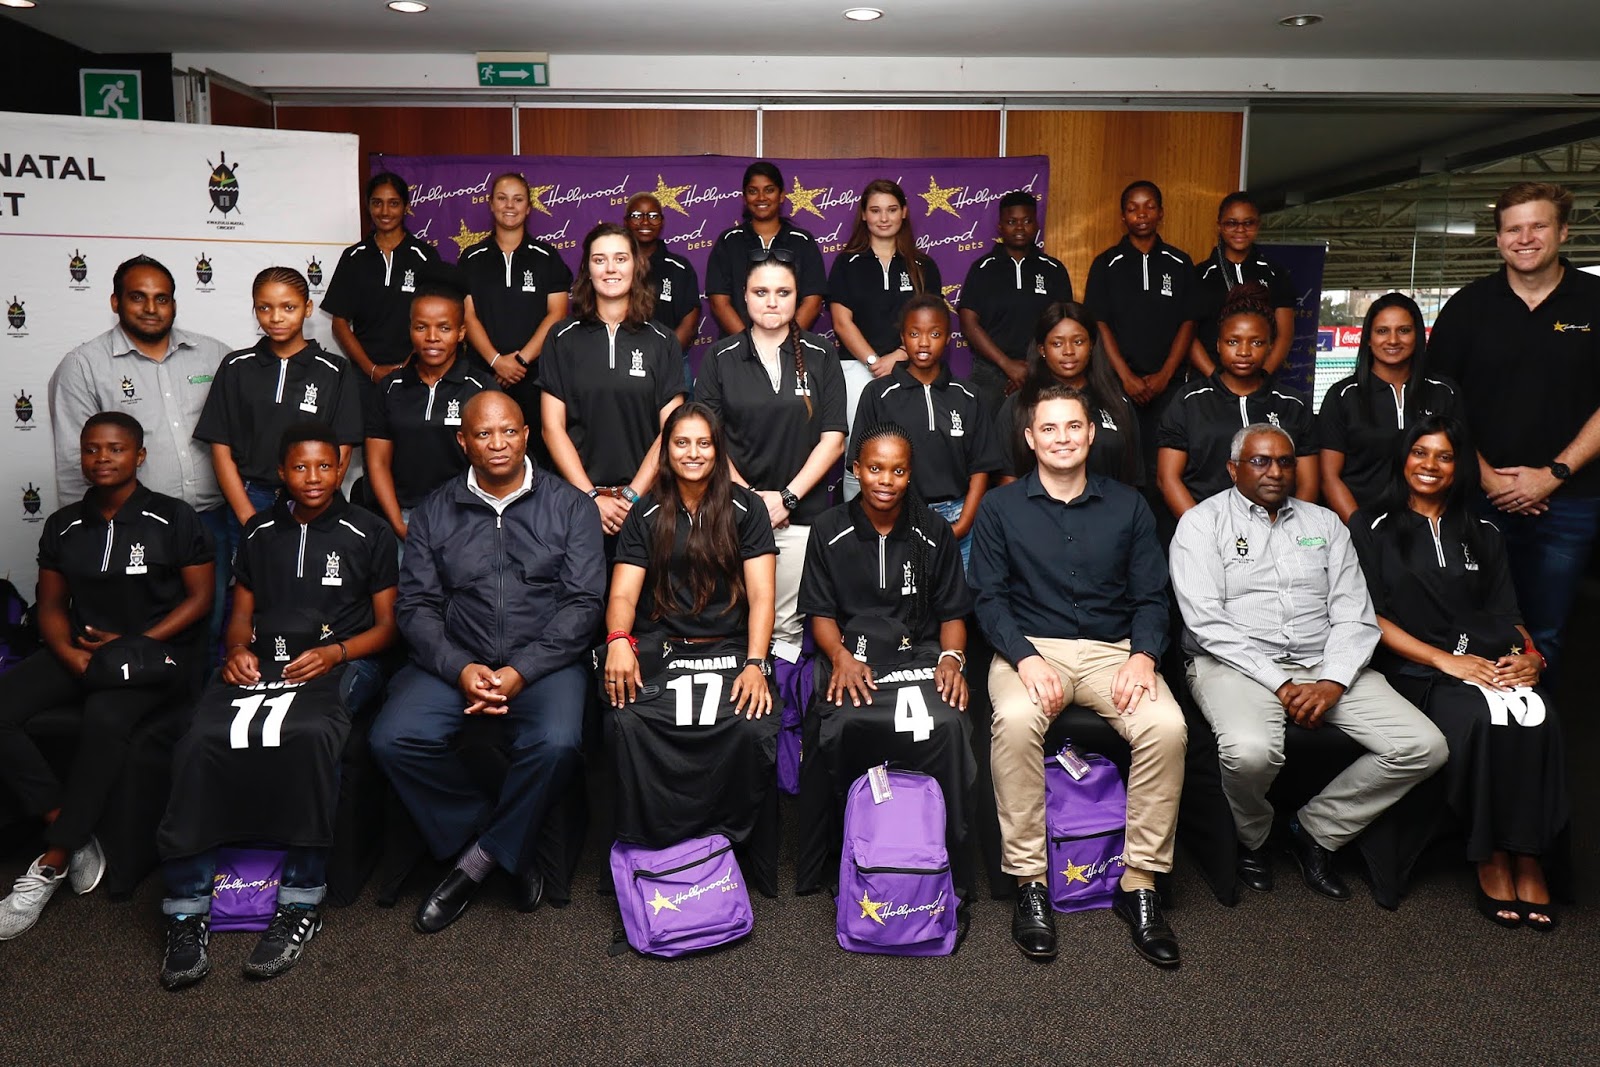 Hollywoodbets KZN Coastal Women's Cricket Team pose for photo